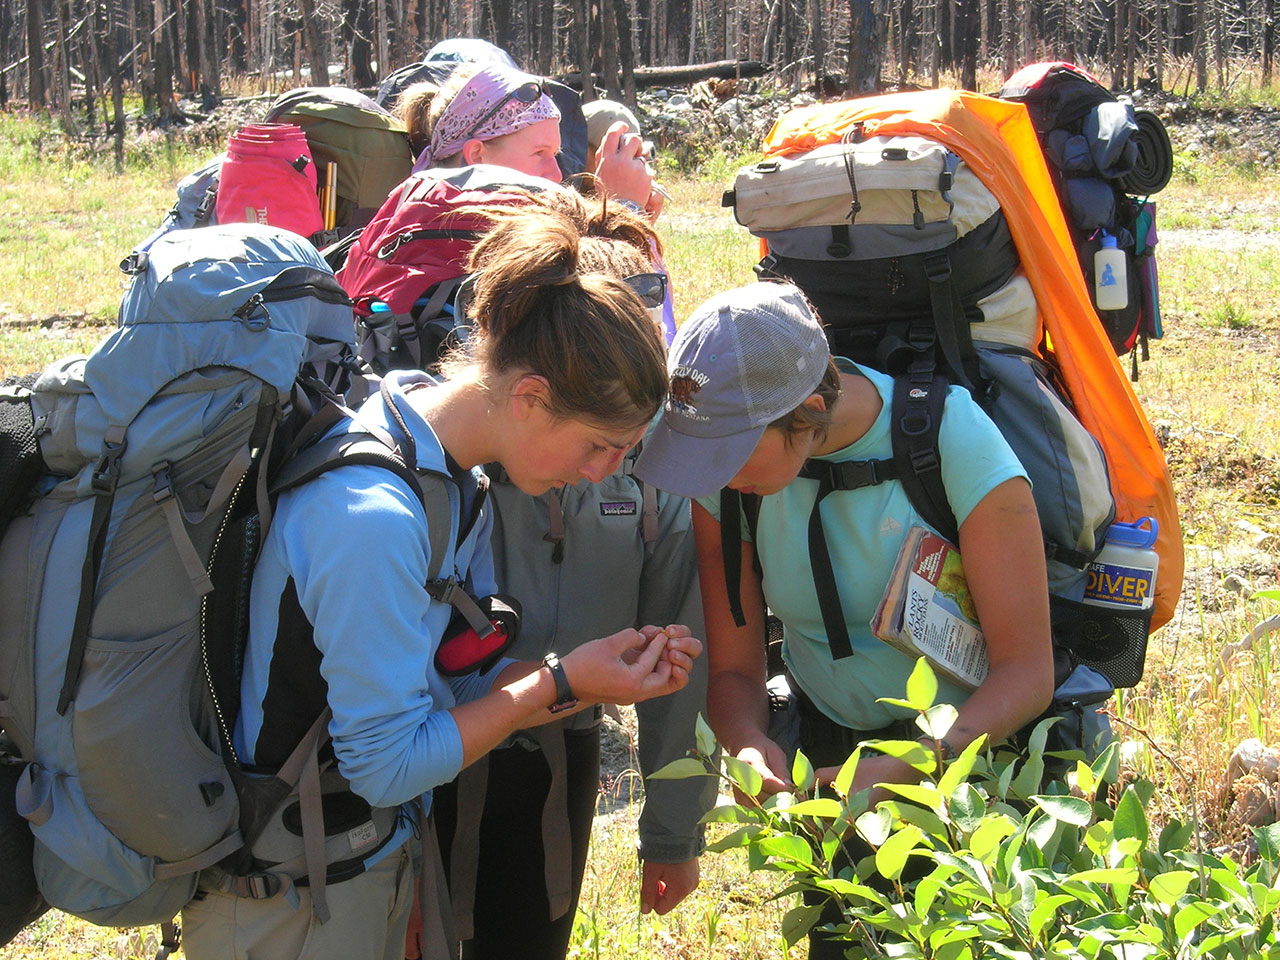 Students looking at plant samples